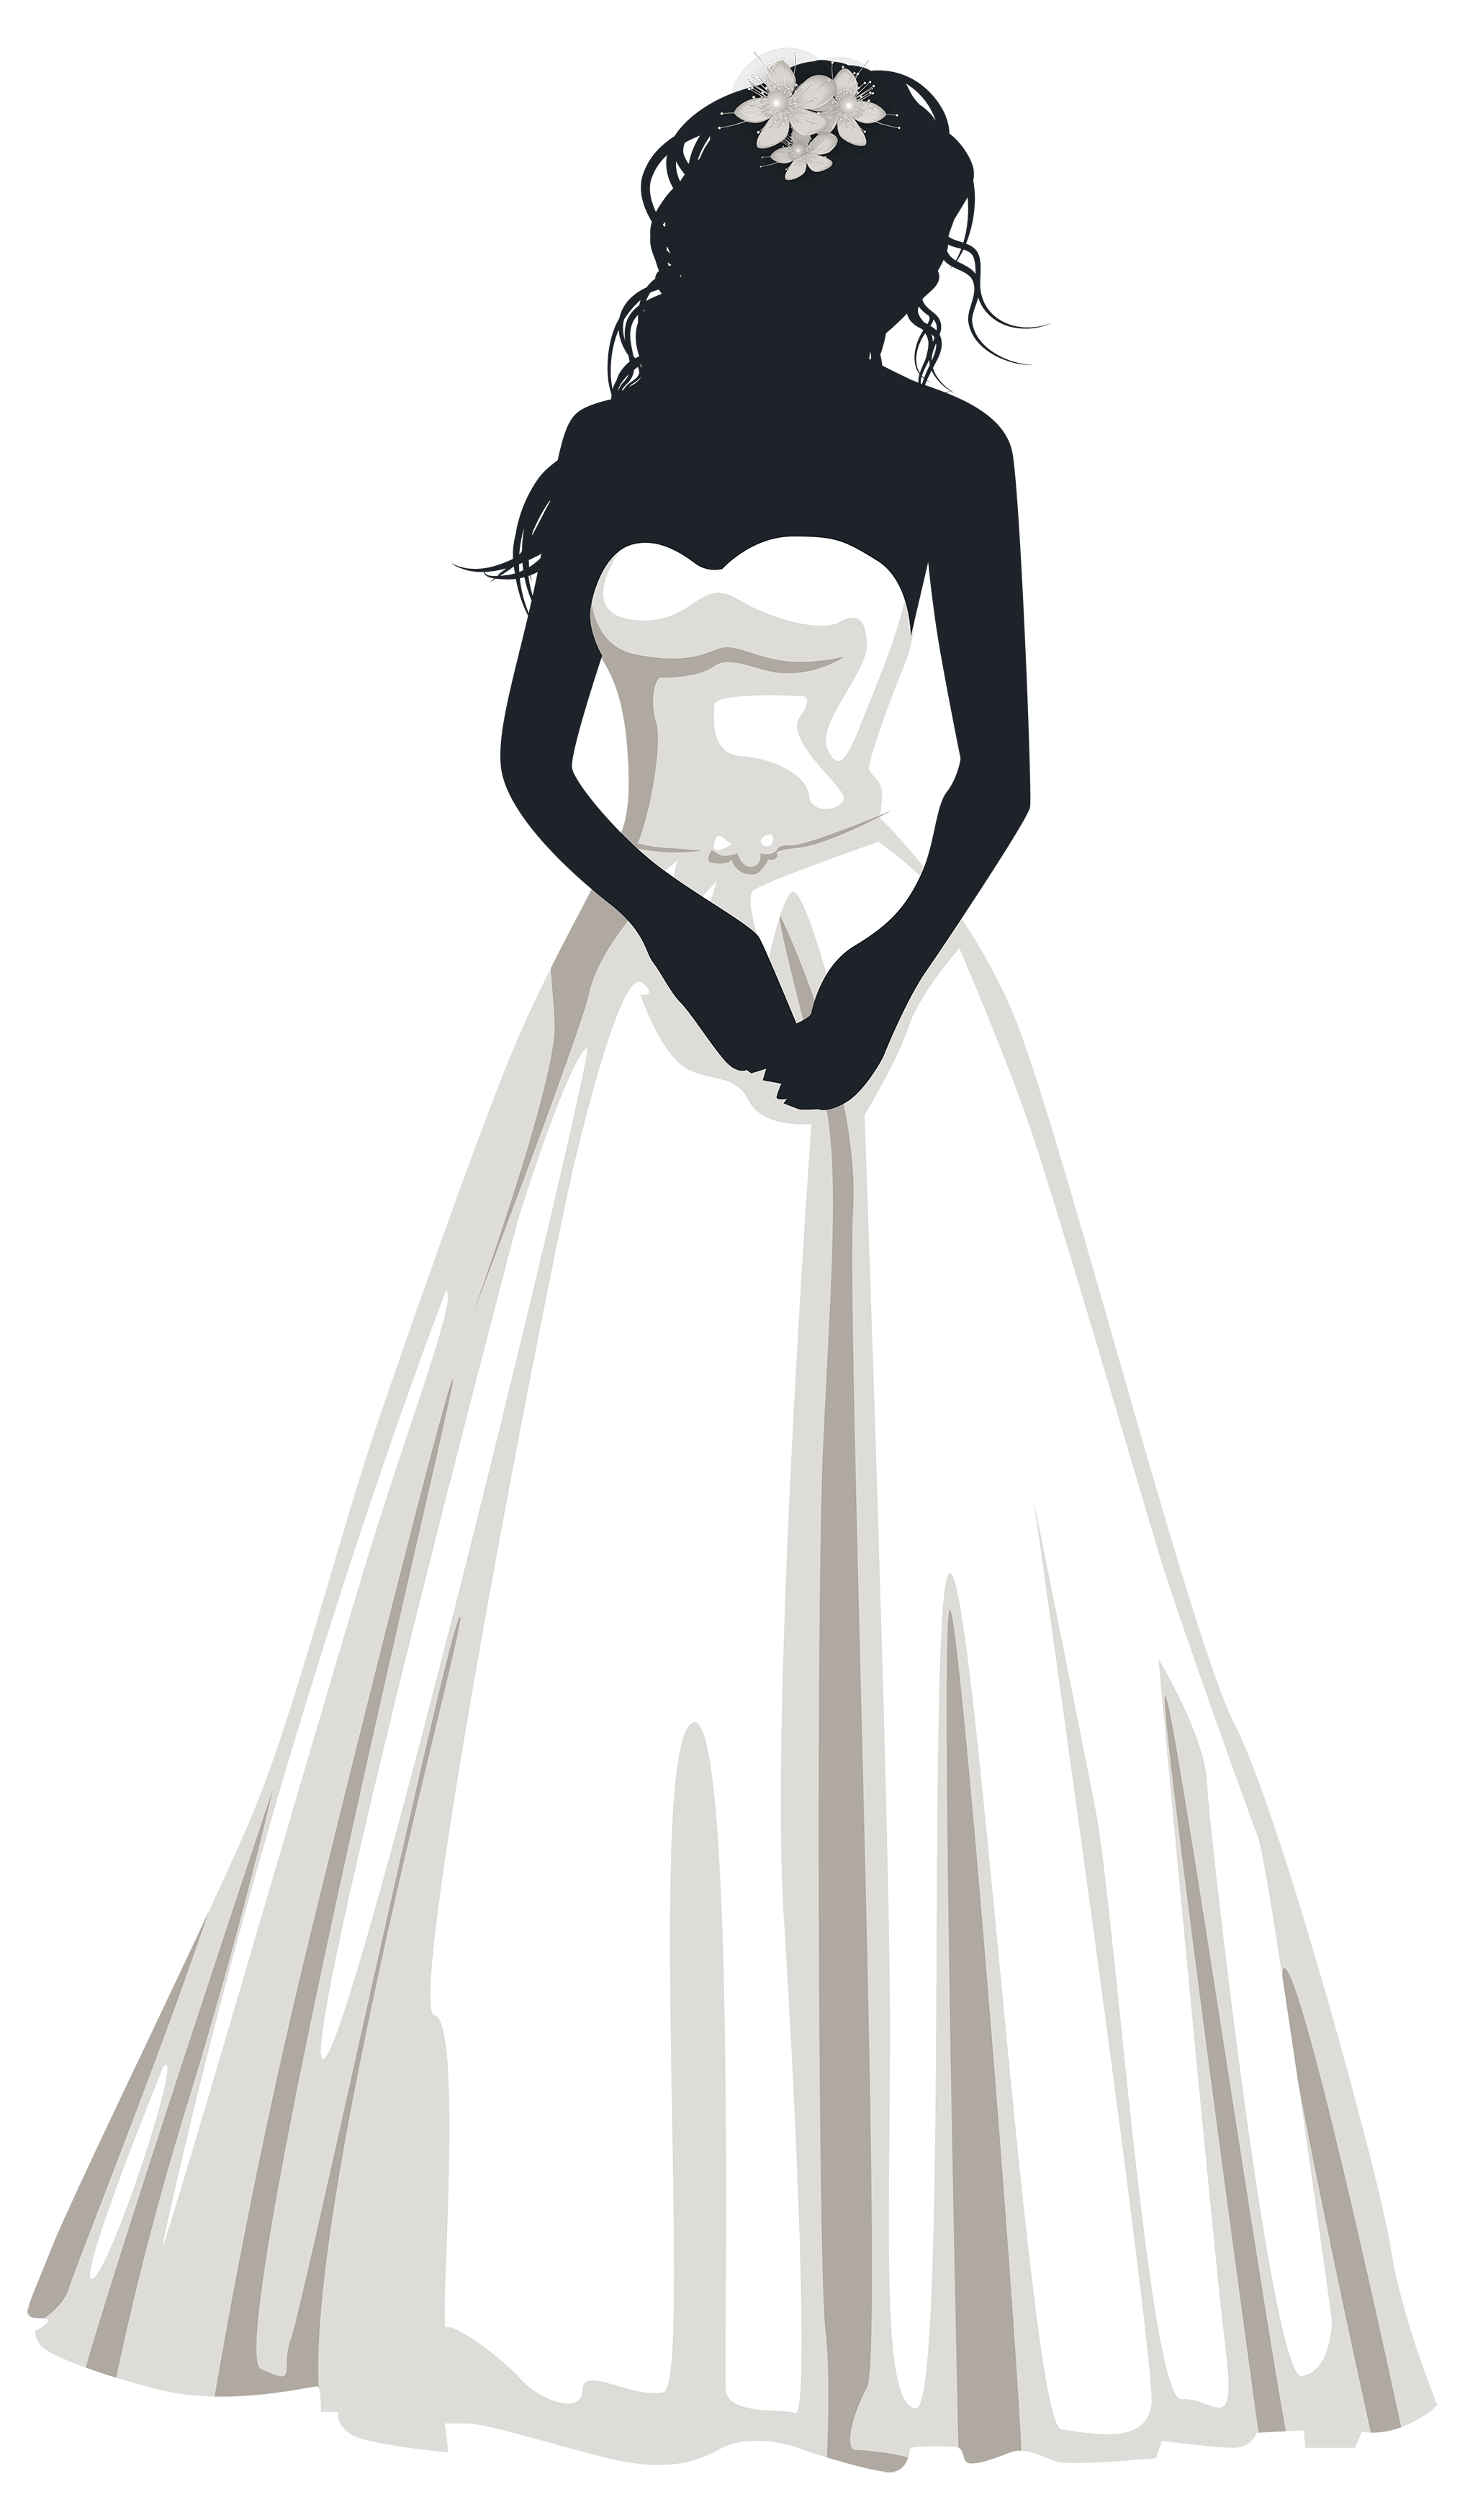 Bride PNG Image